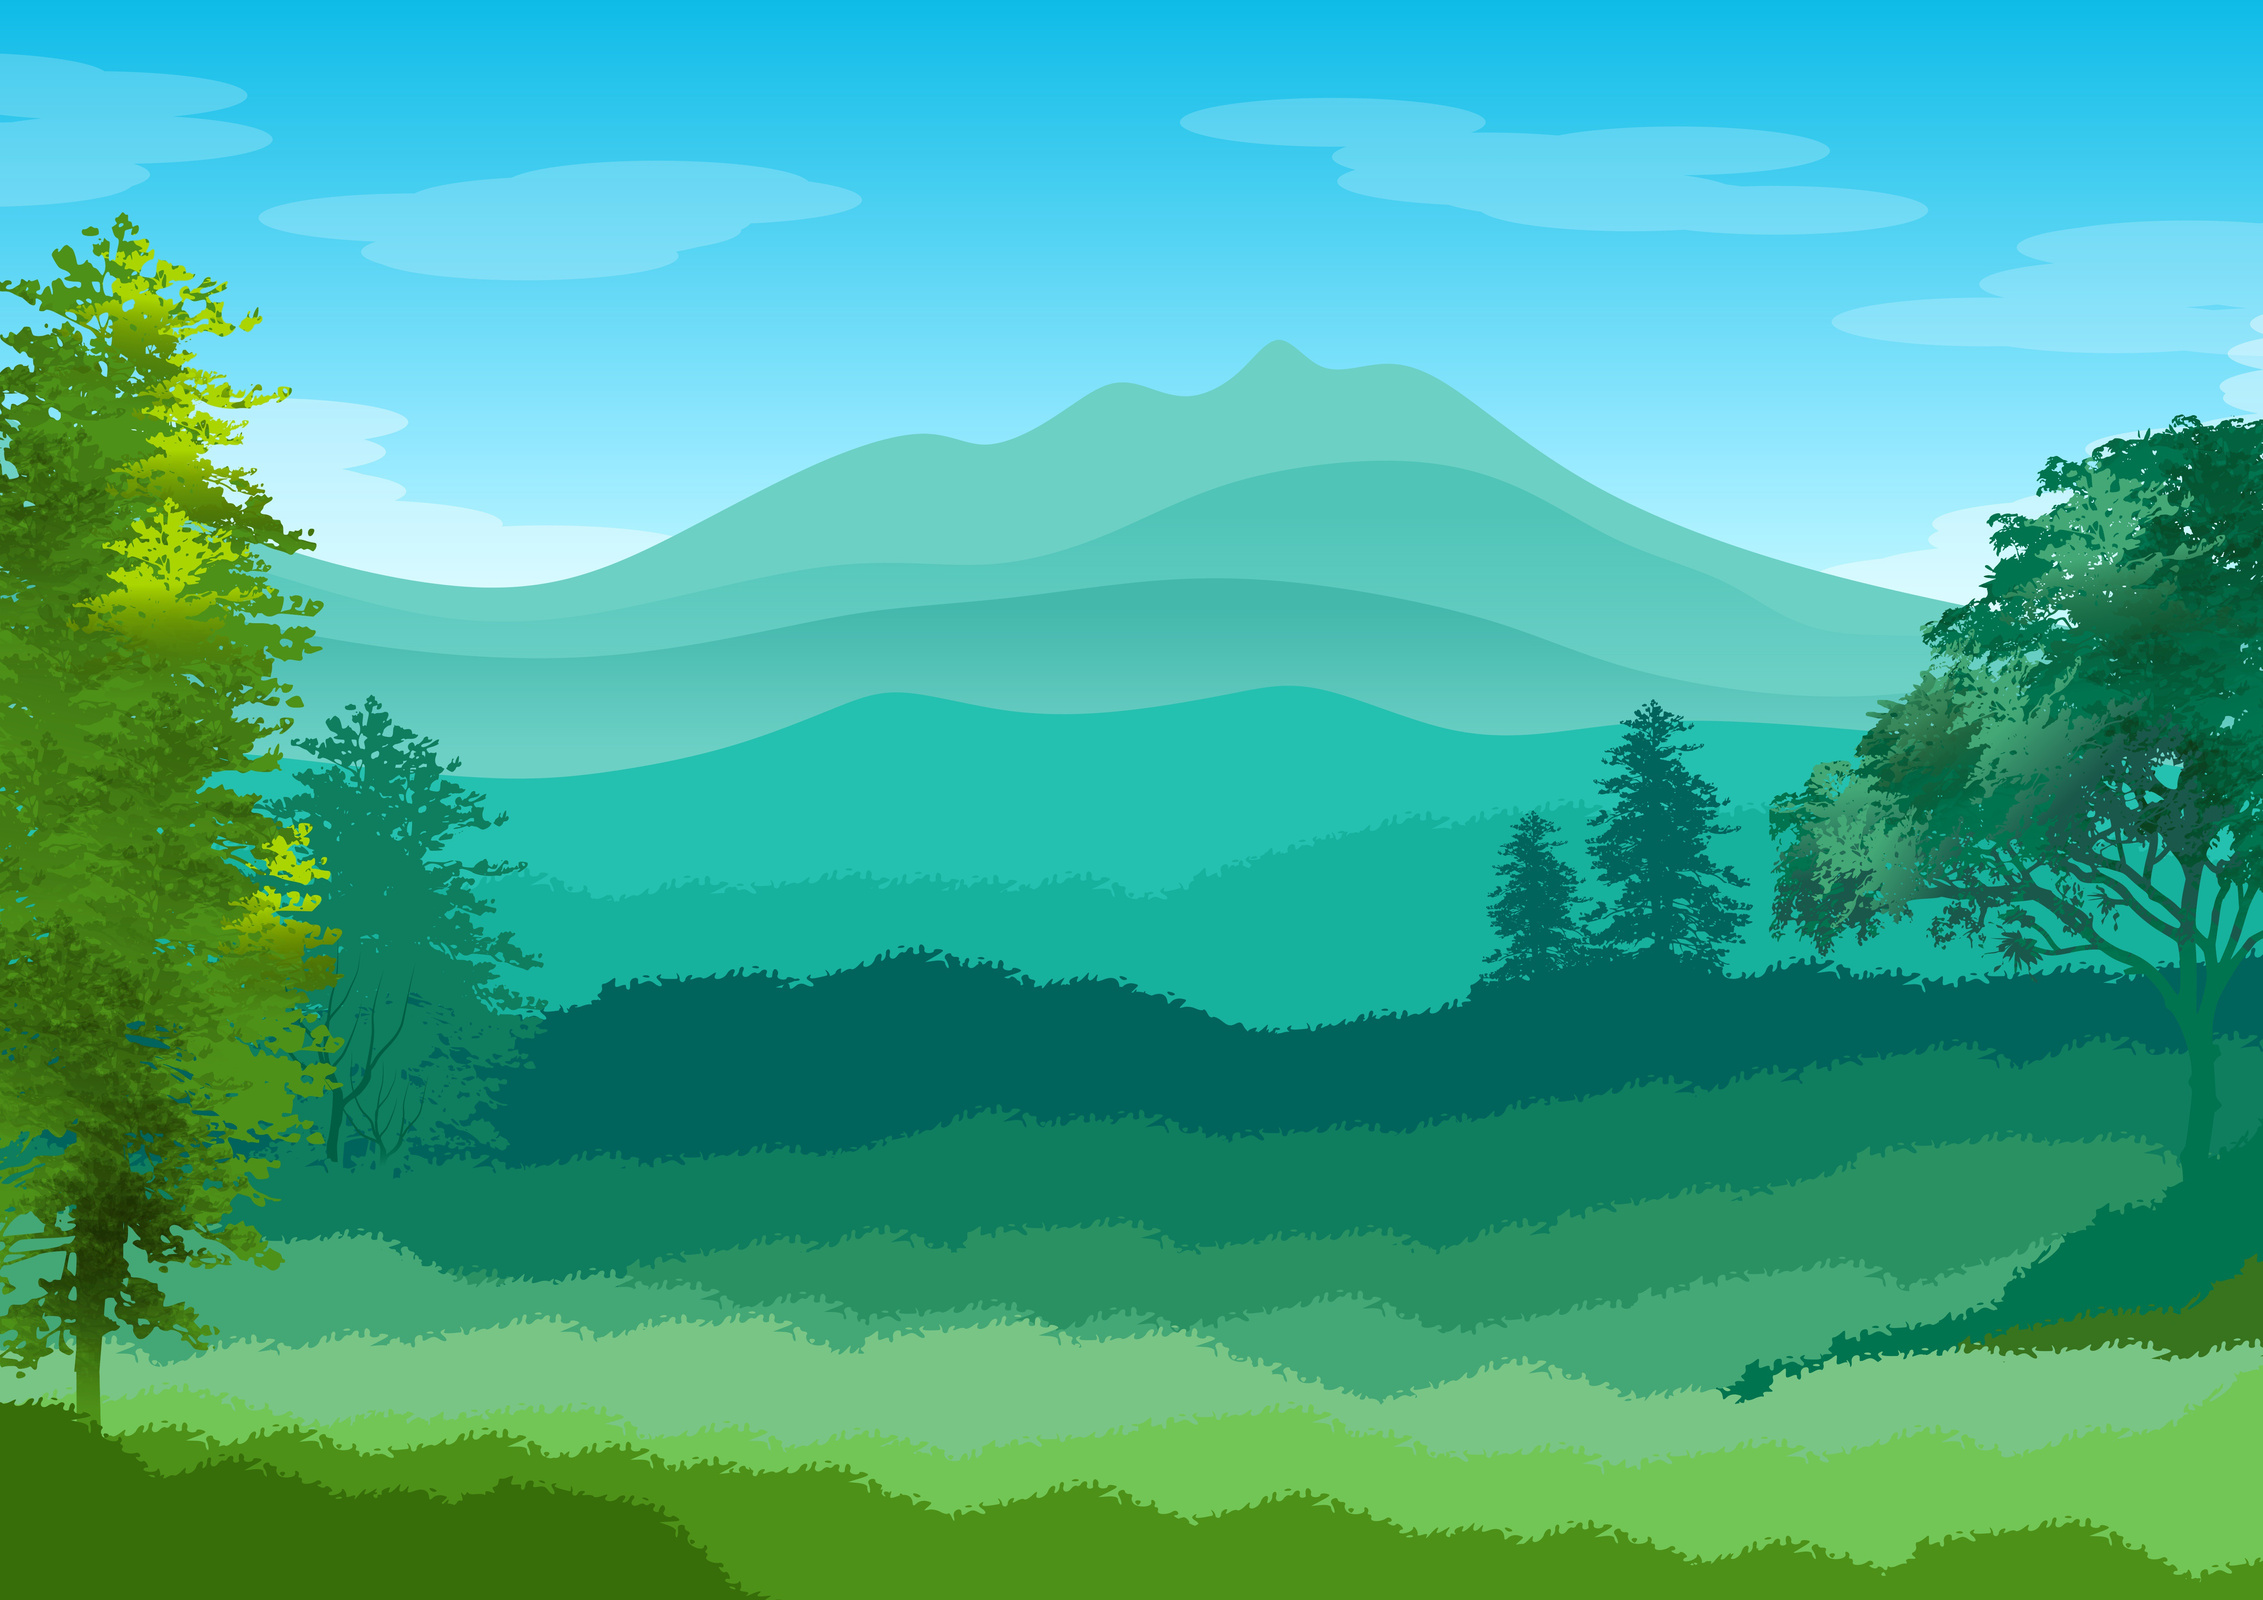 Hills with Trees Landscape Illustration